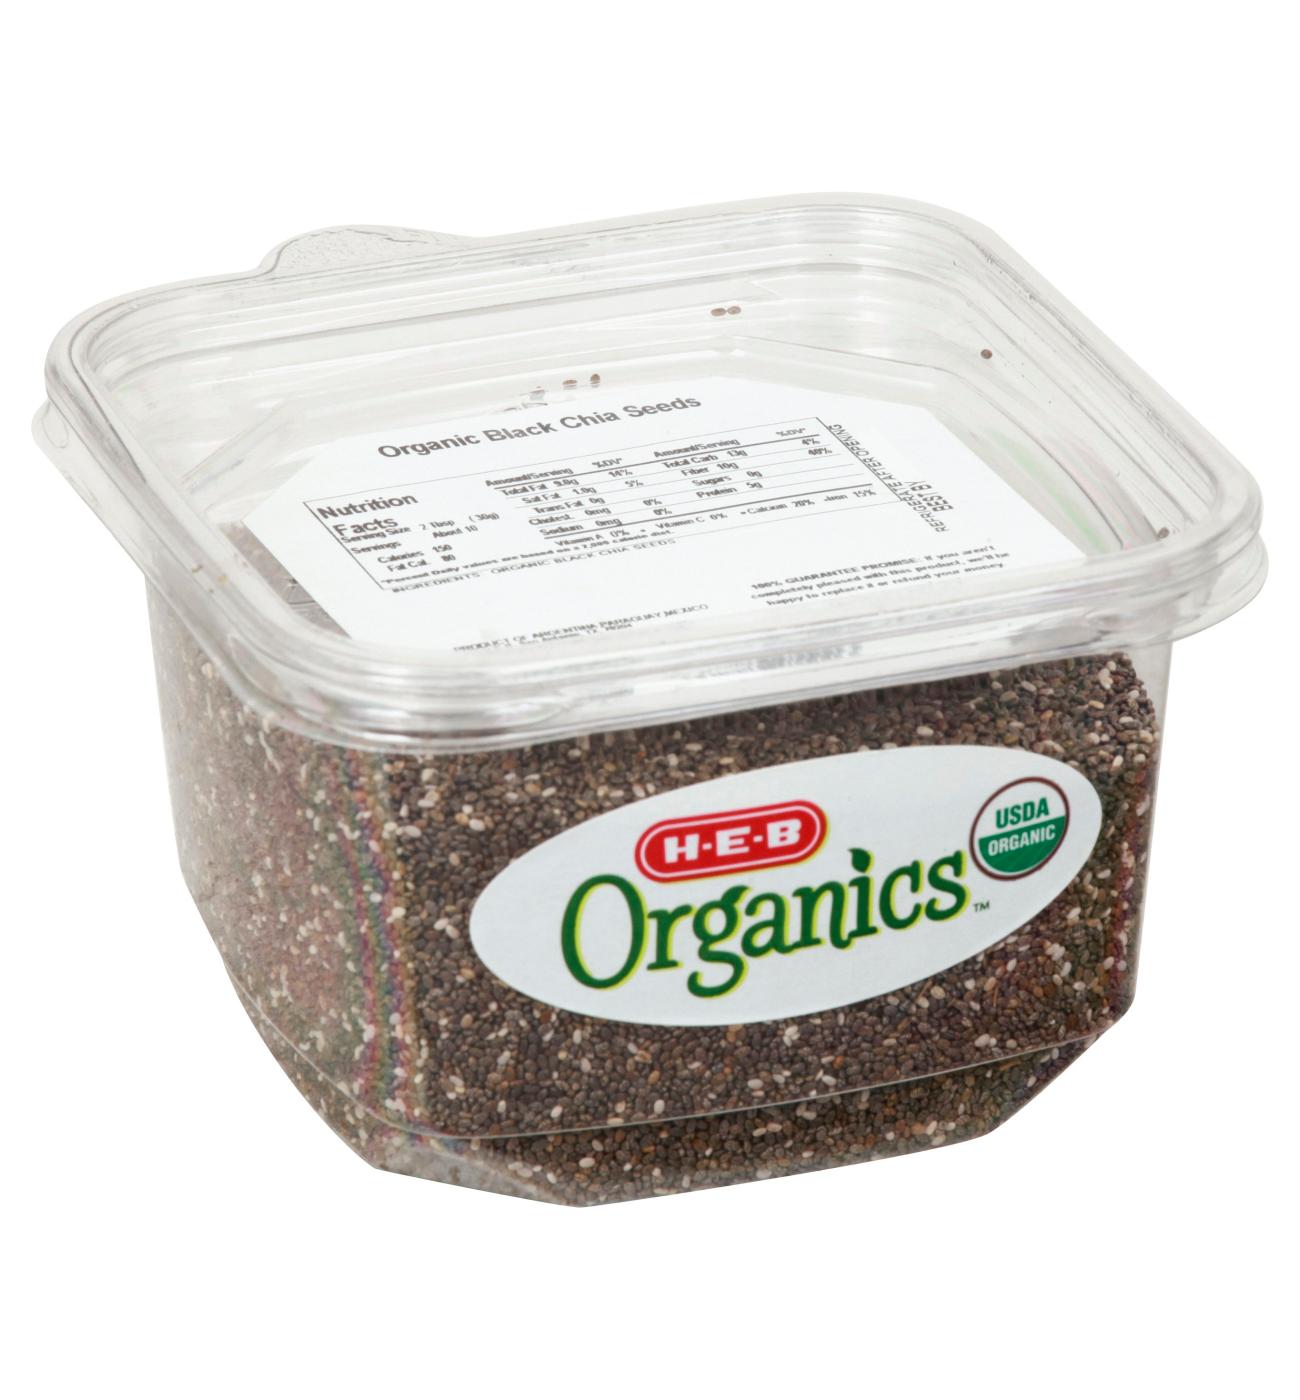 H-E-B Organic Black Chia Seeds; image 1 of 2